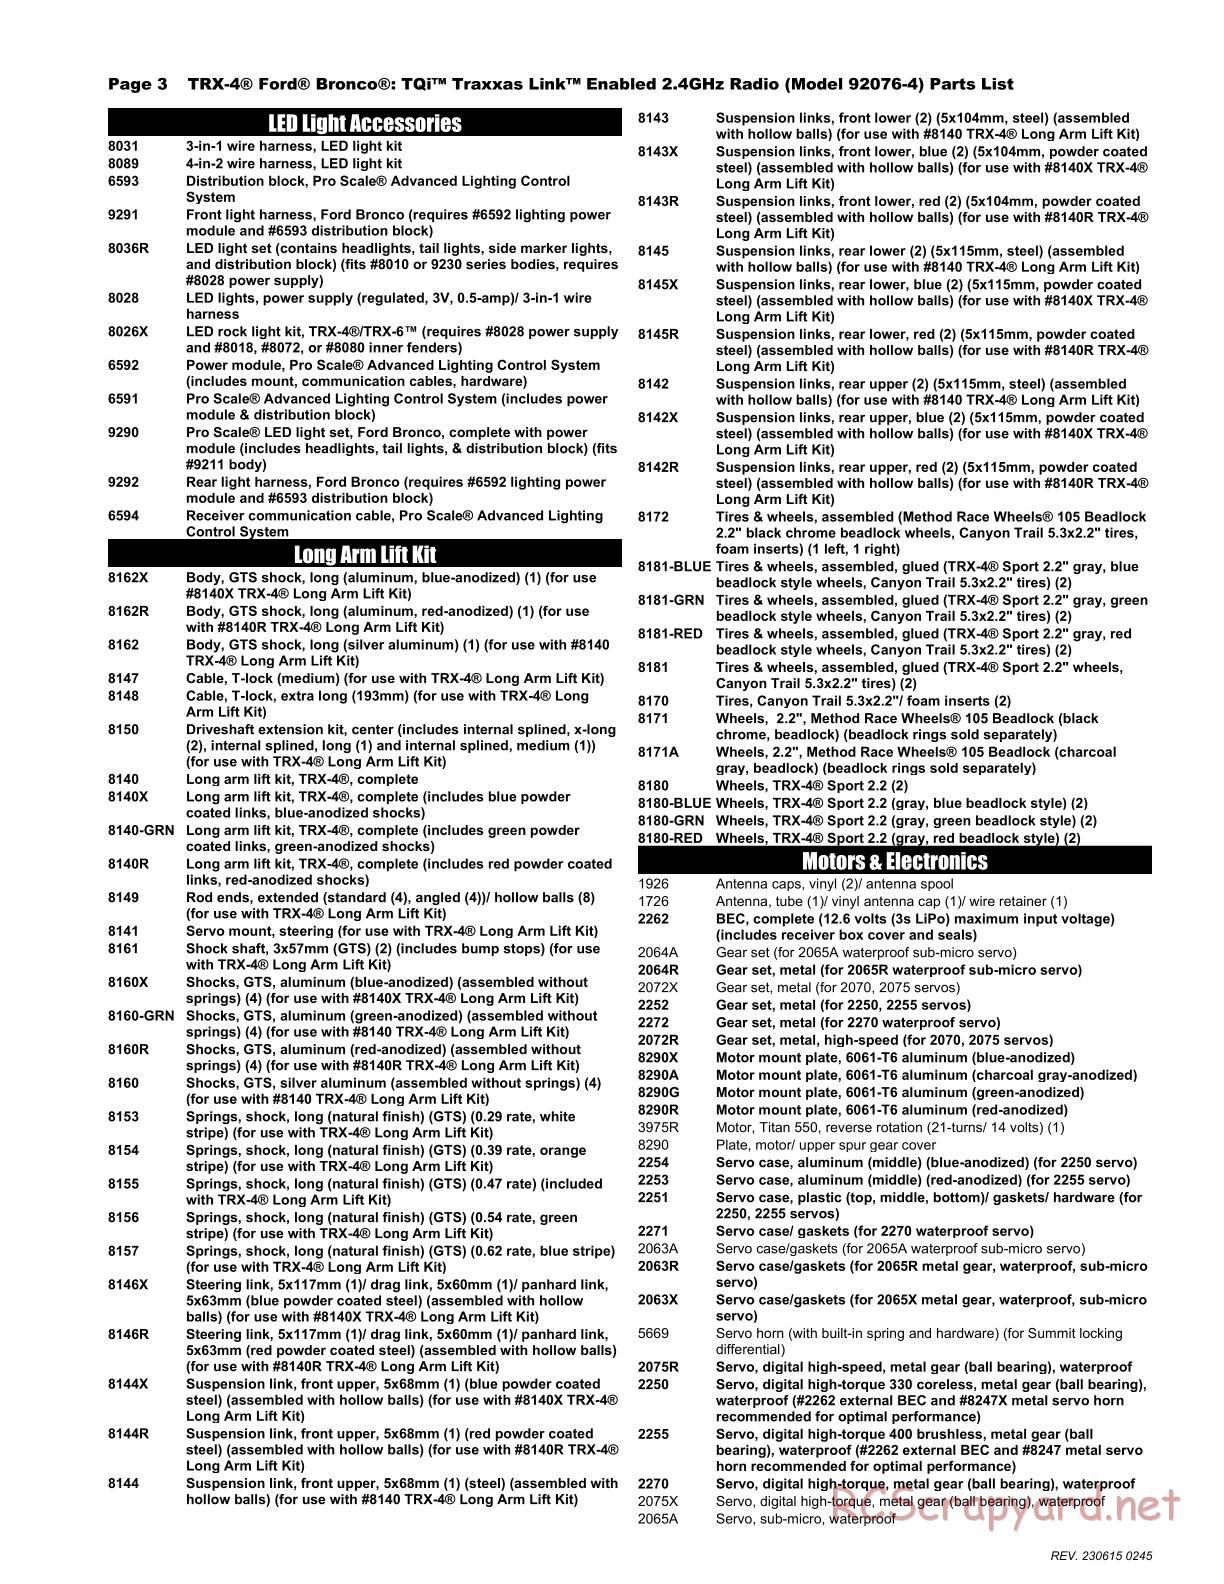 Traxxas - TRX-4 Ford Bronco (2021) - Parts List - Page 3